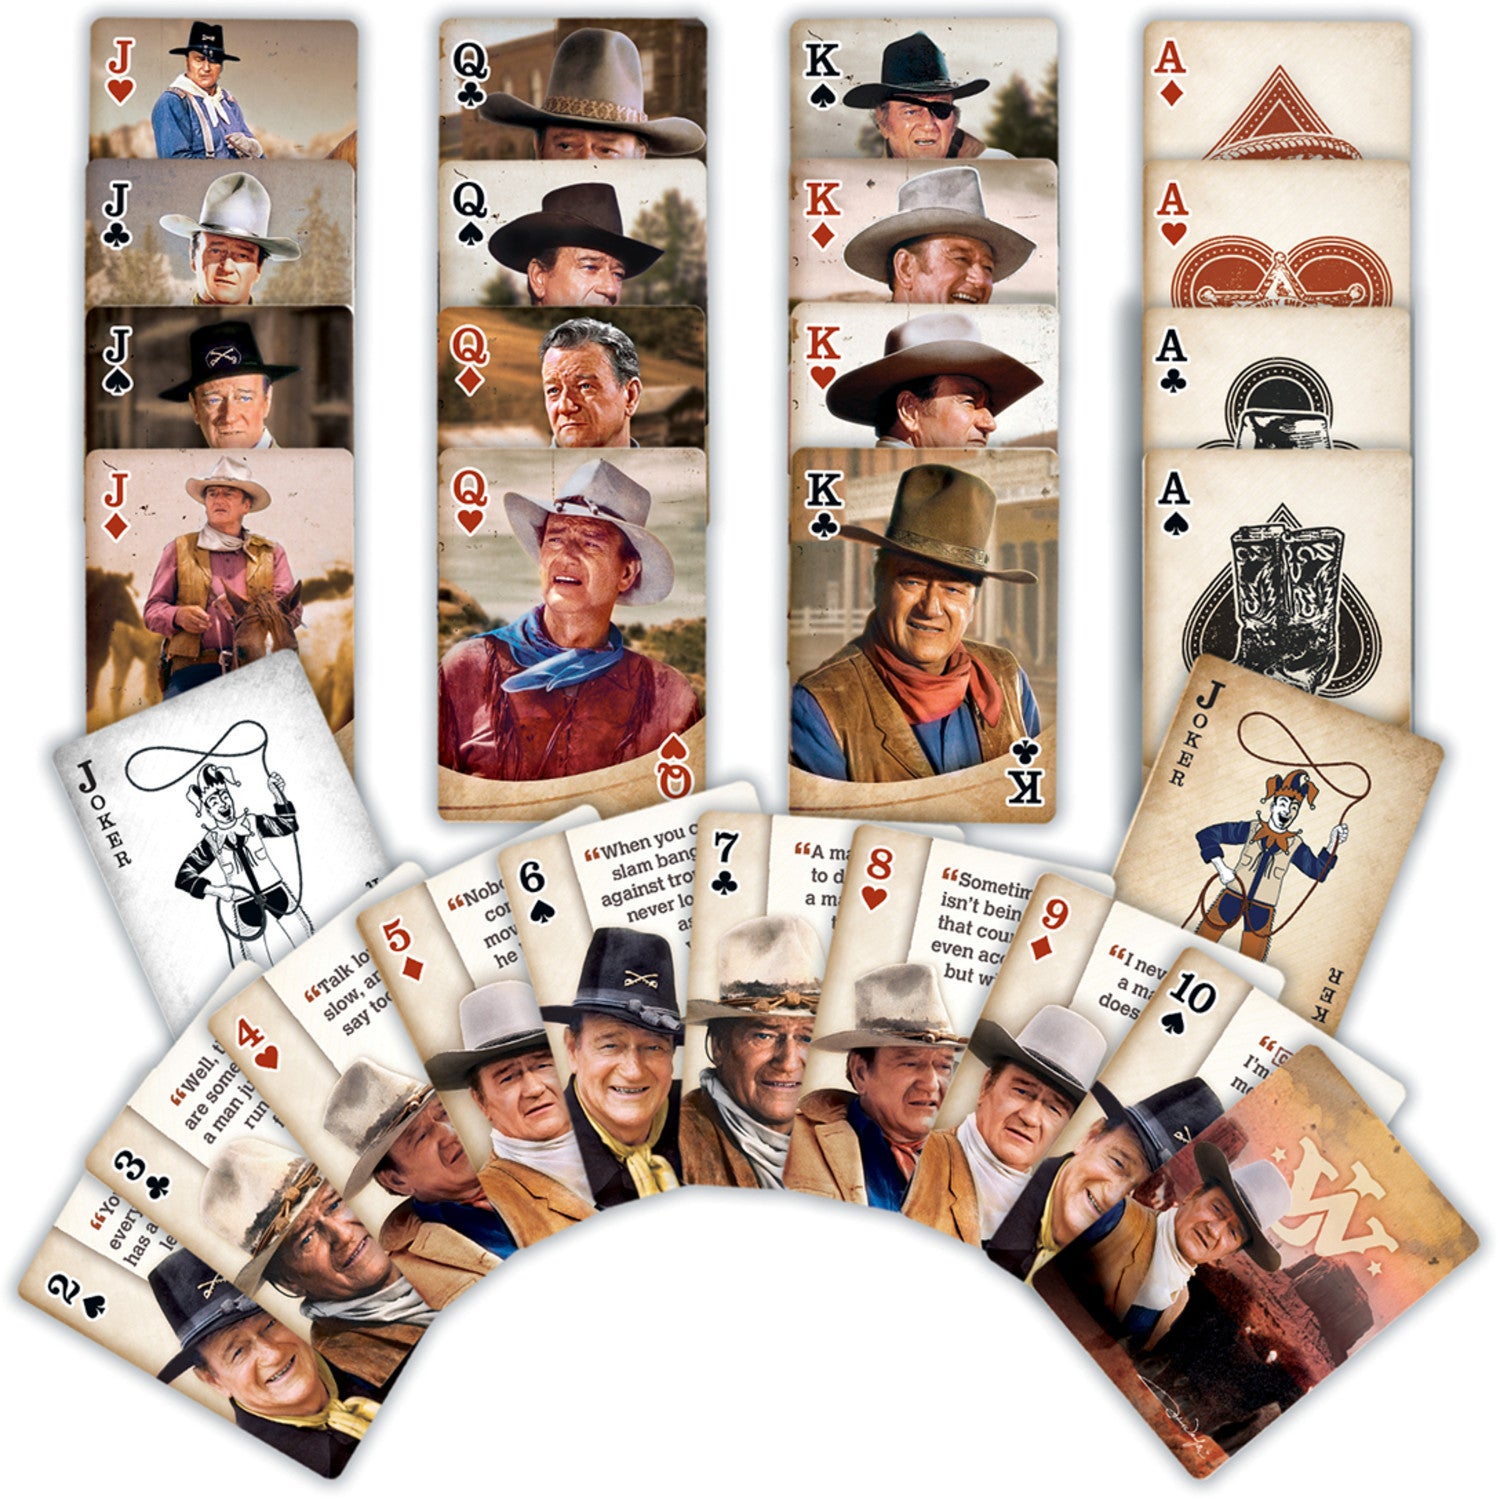 John Wayne Playing Cards